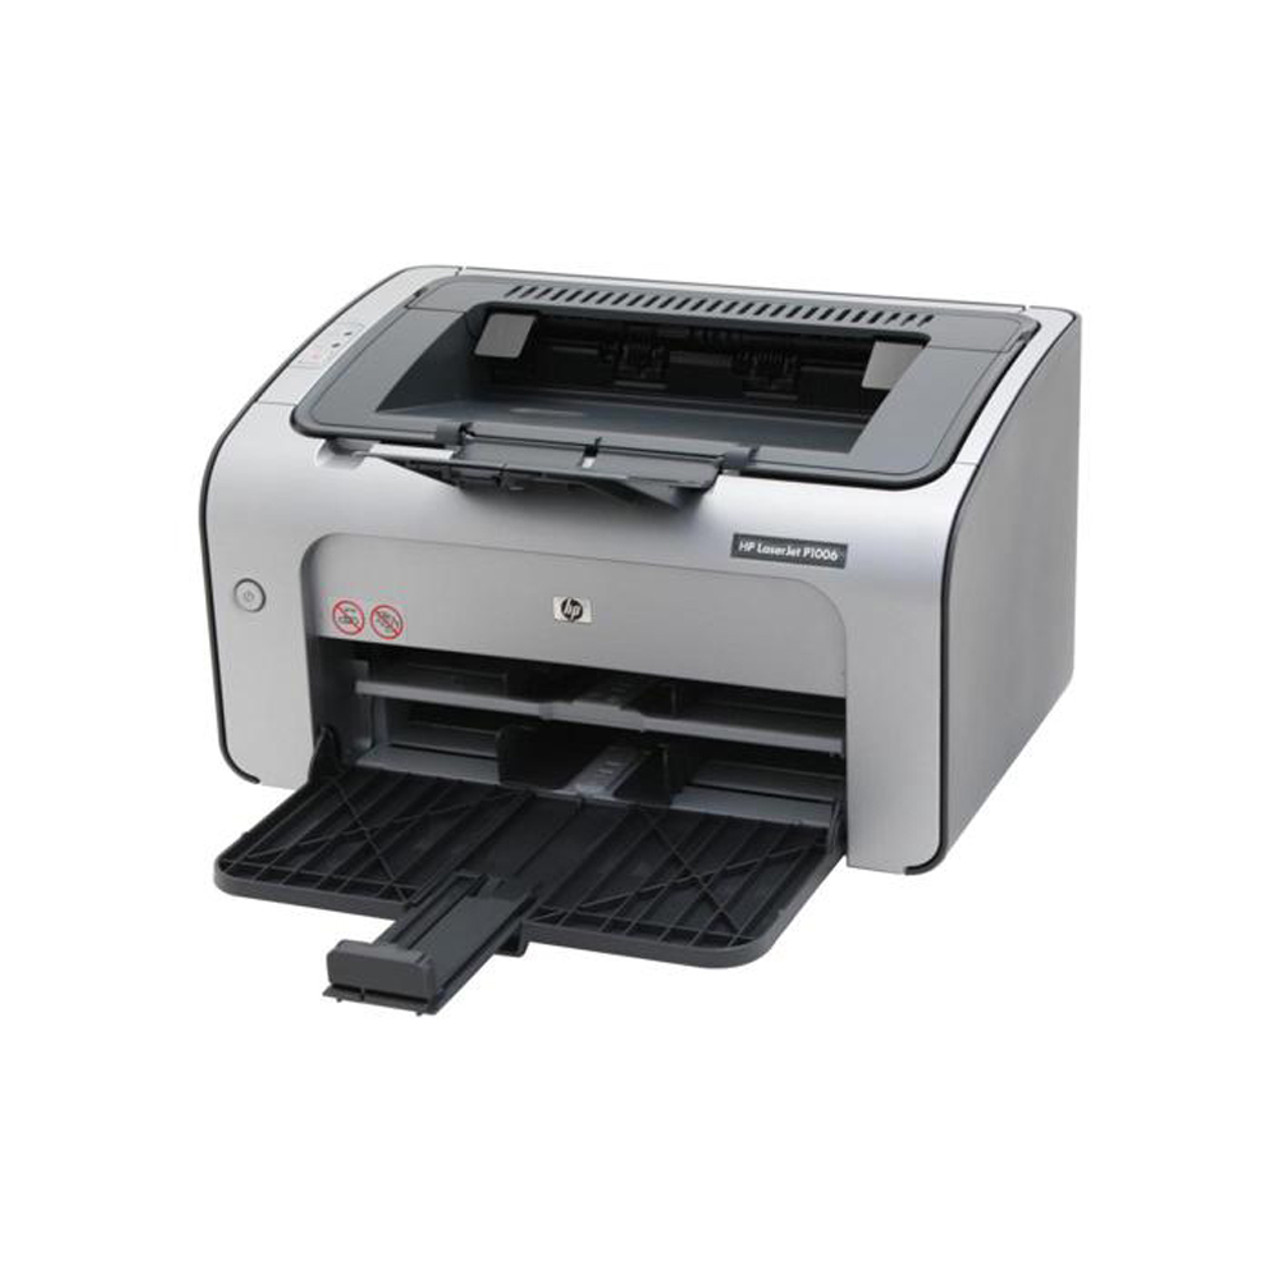 LaserJet P1006 Printer